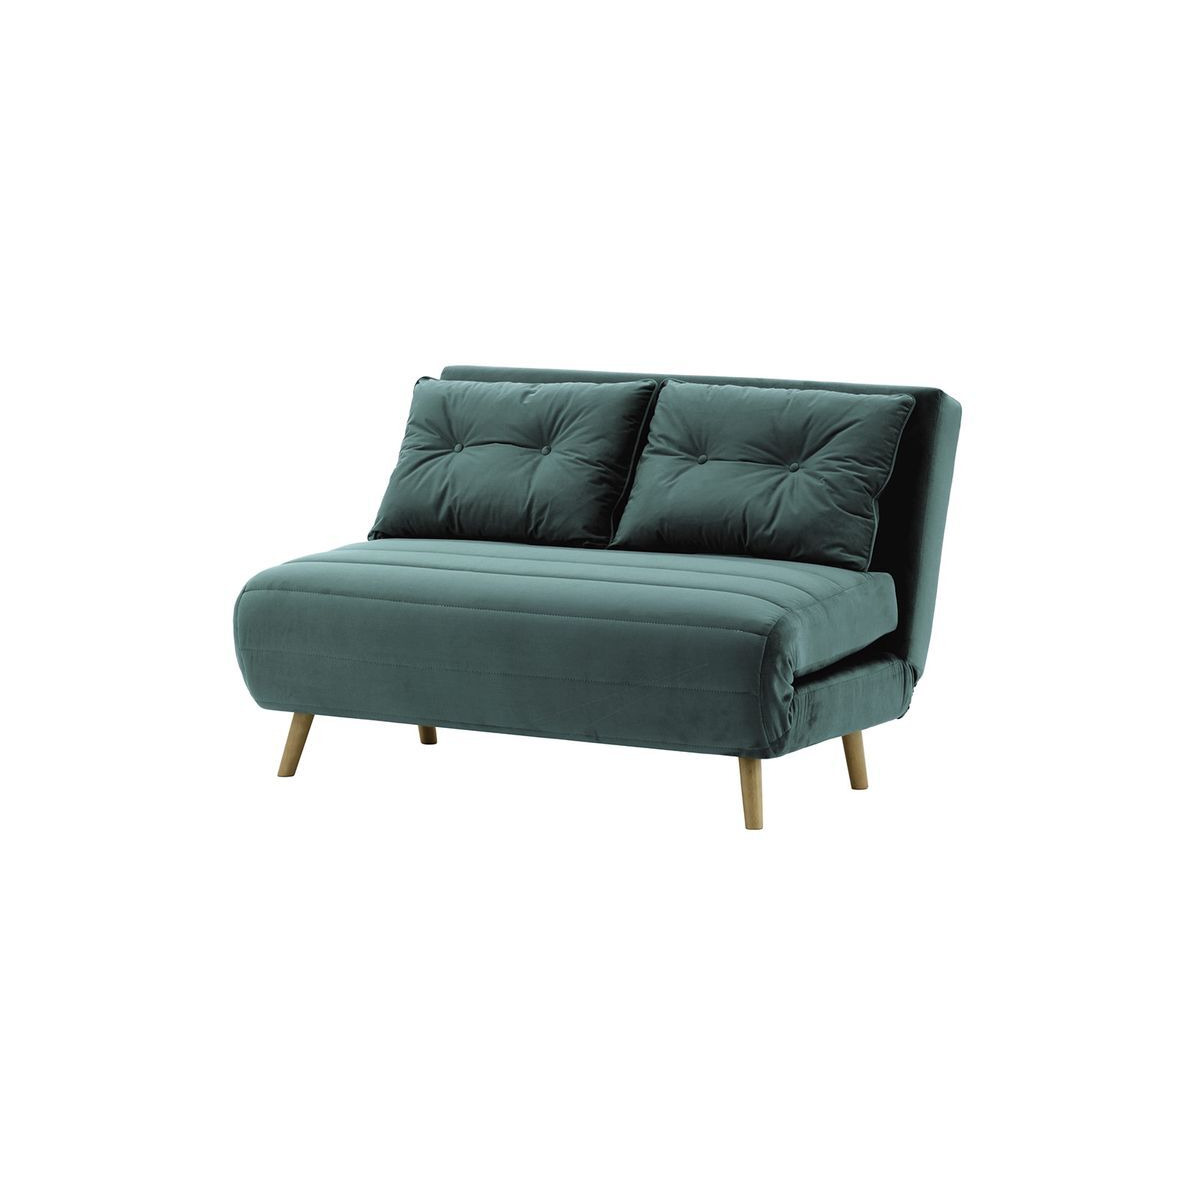 Flic Double Sofa Bed - width 120 cm, dirty blue, Leg colour: wax black - image 1